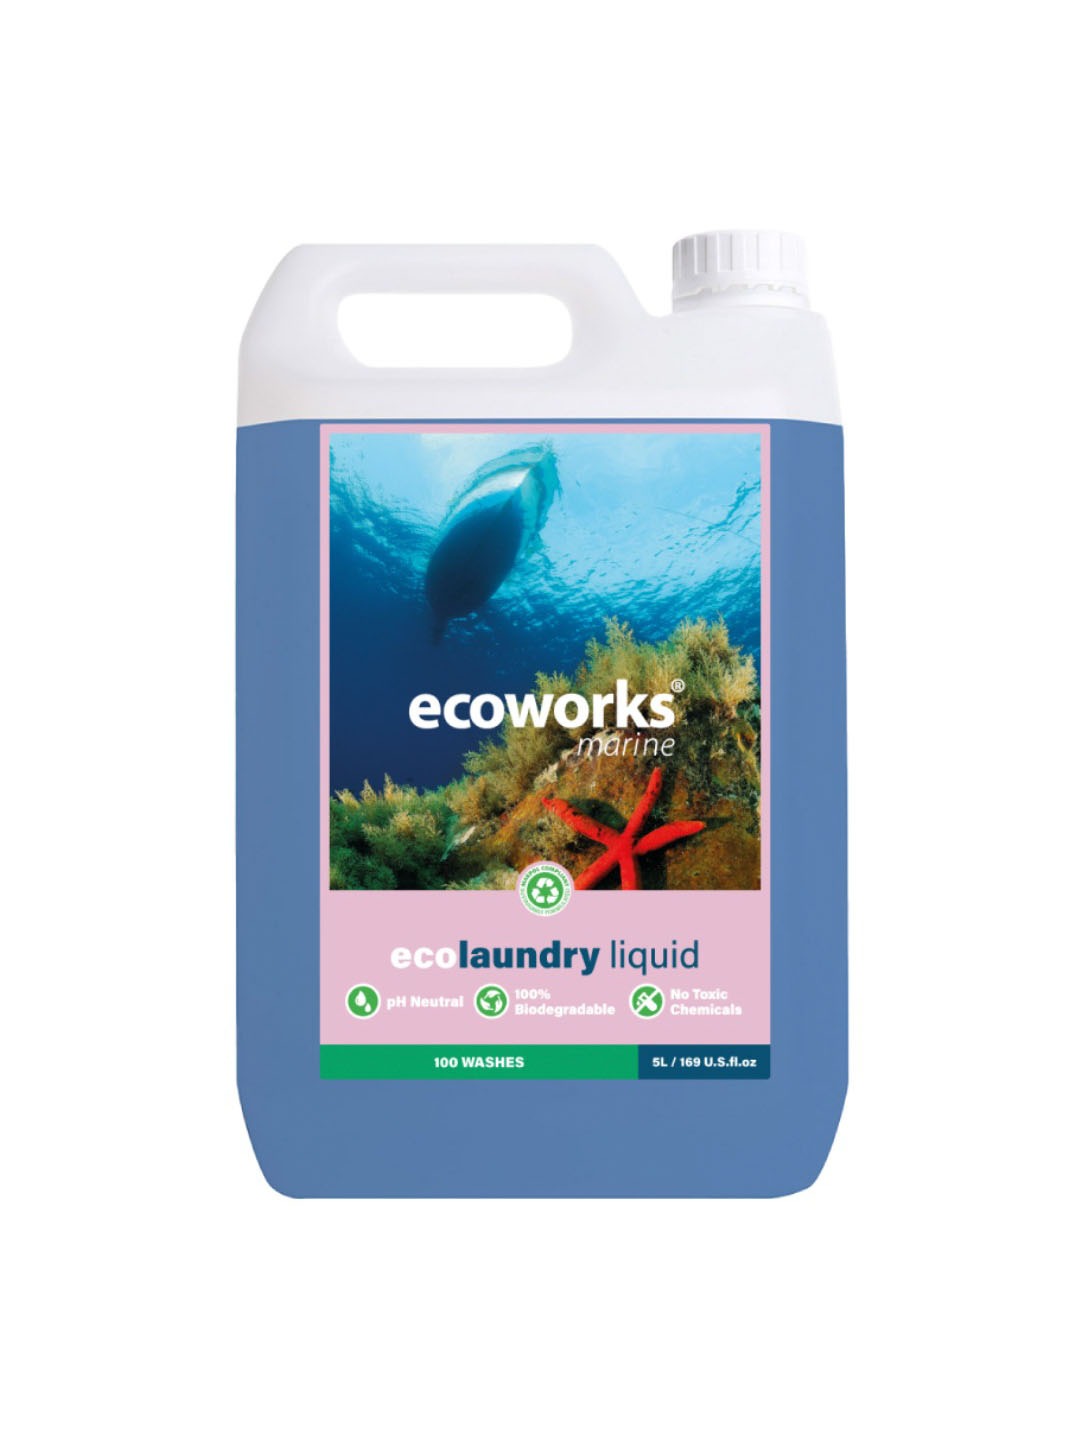 Eco laundry liquid - Super Concentrated